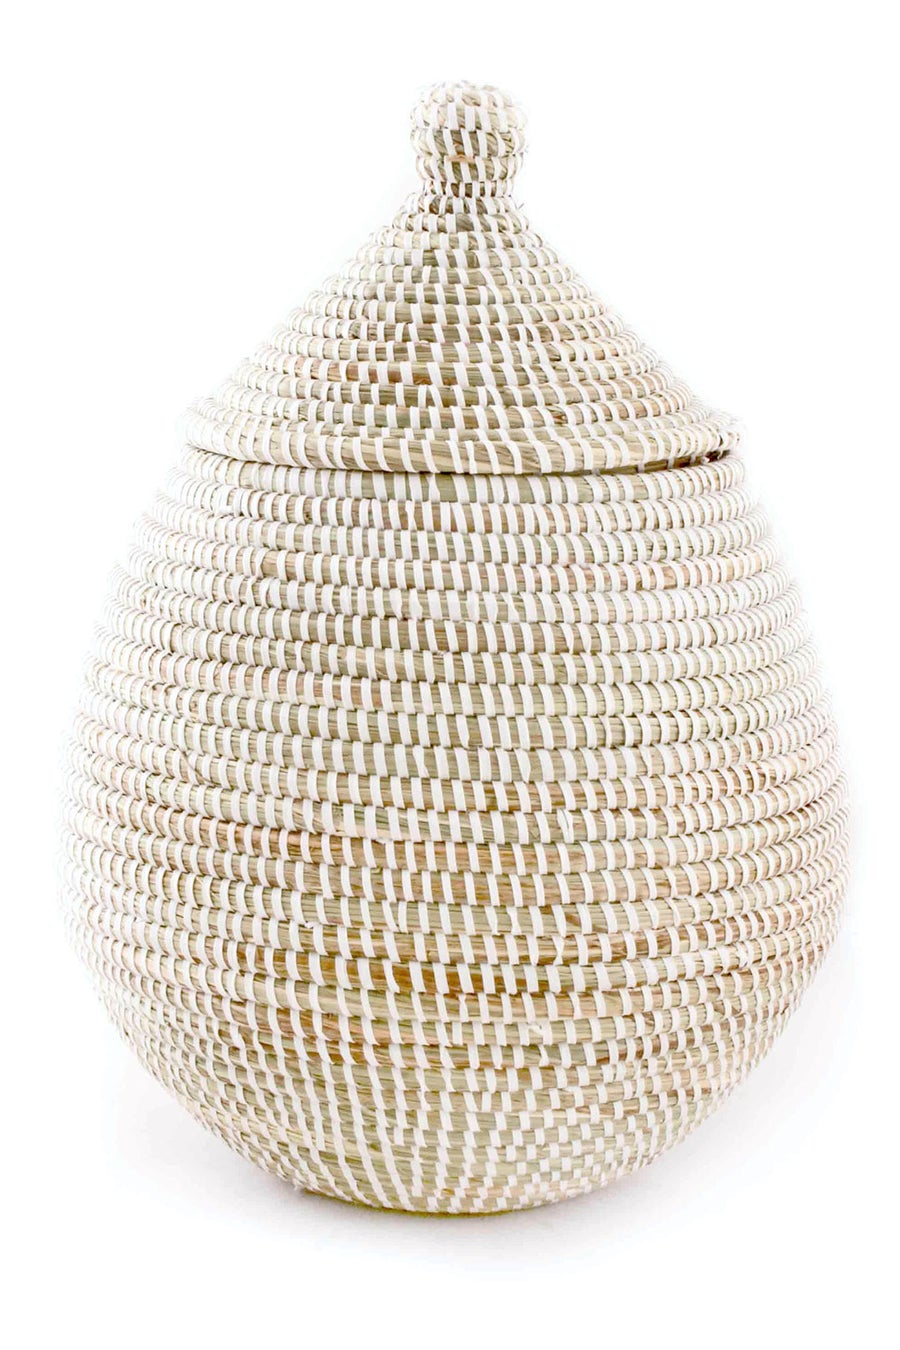 White Gourd Basket